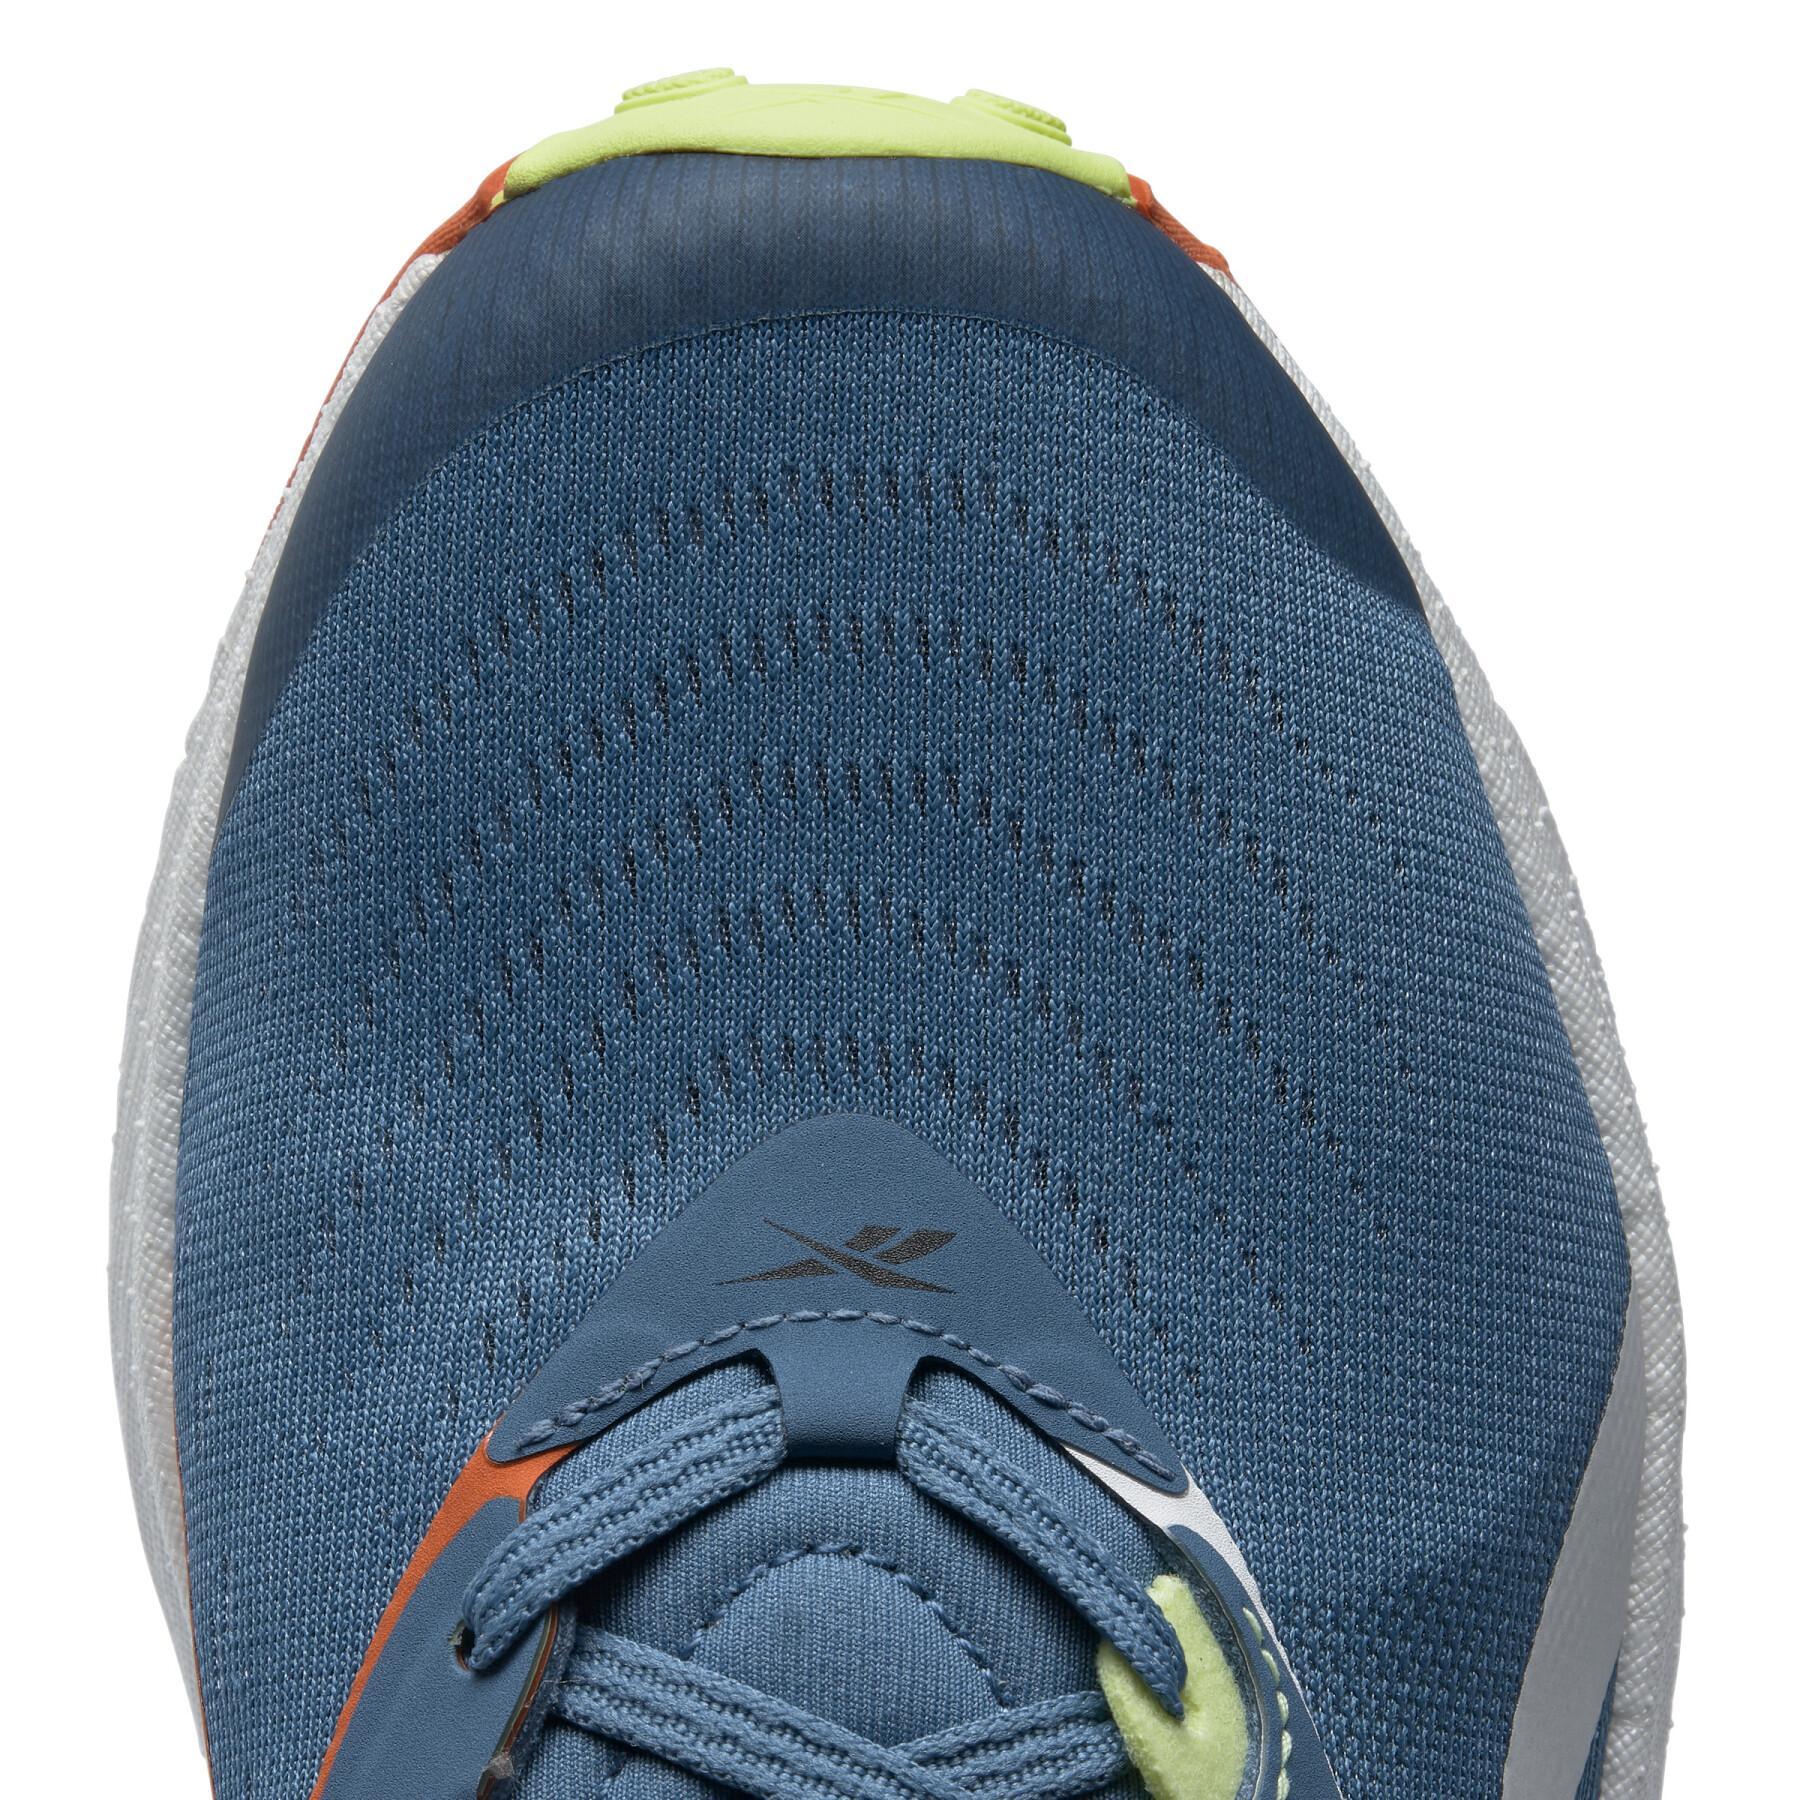 Running shoes Reebok Floatride Energy 5